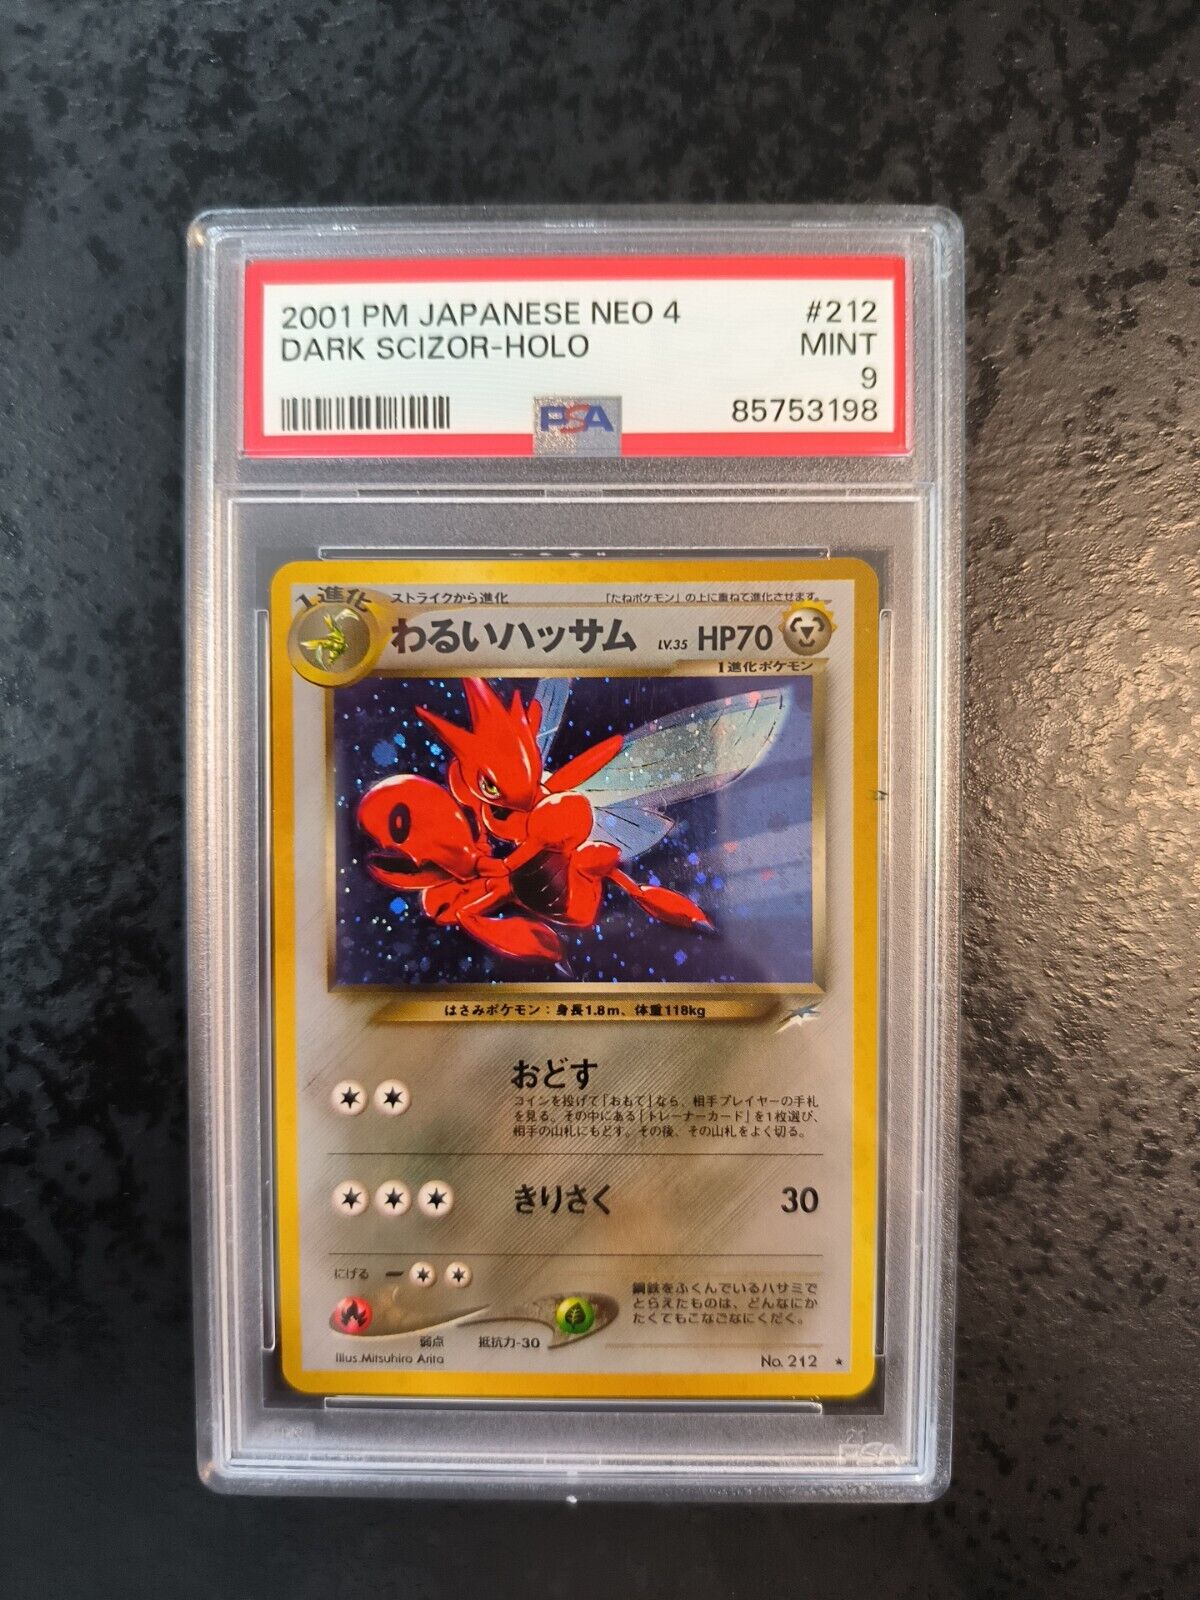 PSA 9 Mint, Japanese Pokemon Card, Dark Scizor Holo #212, NEO 2001